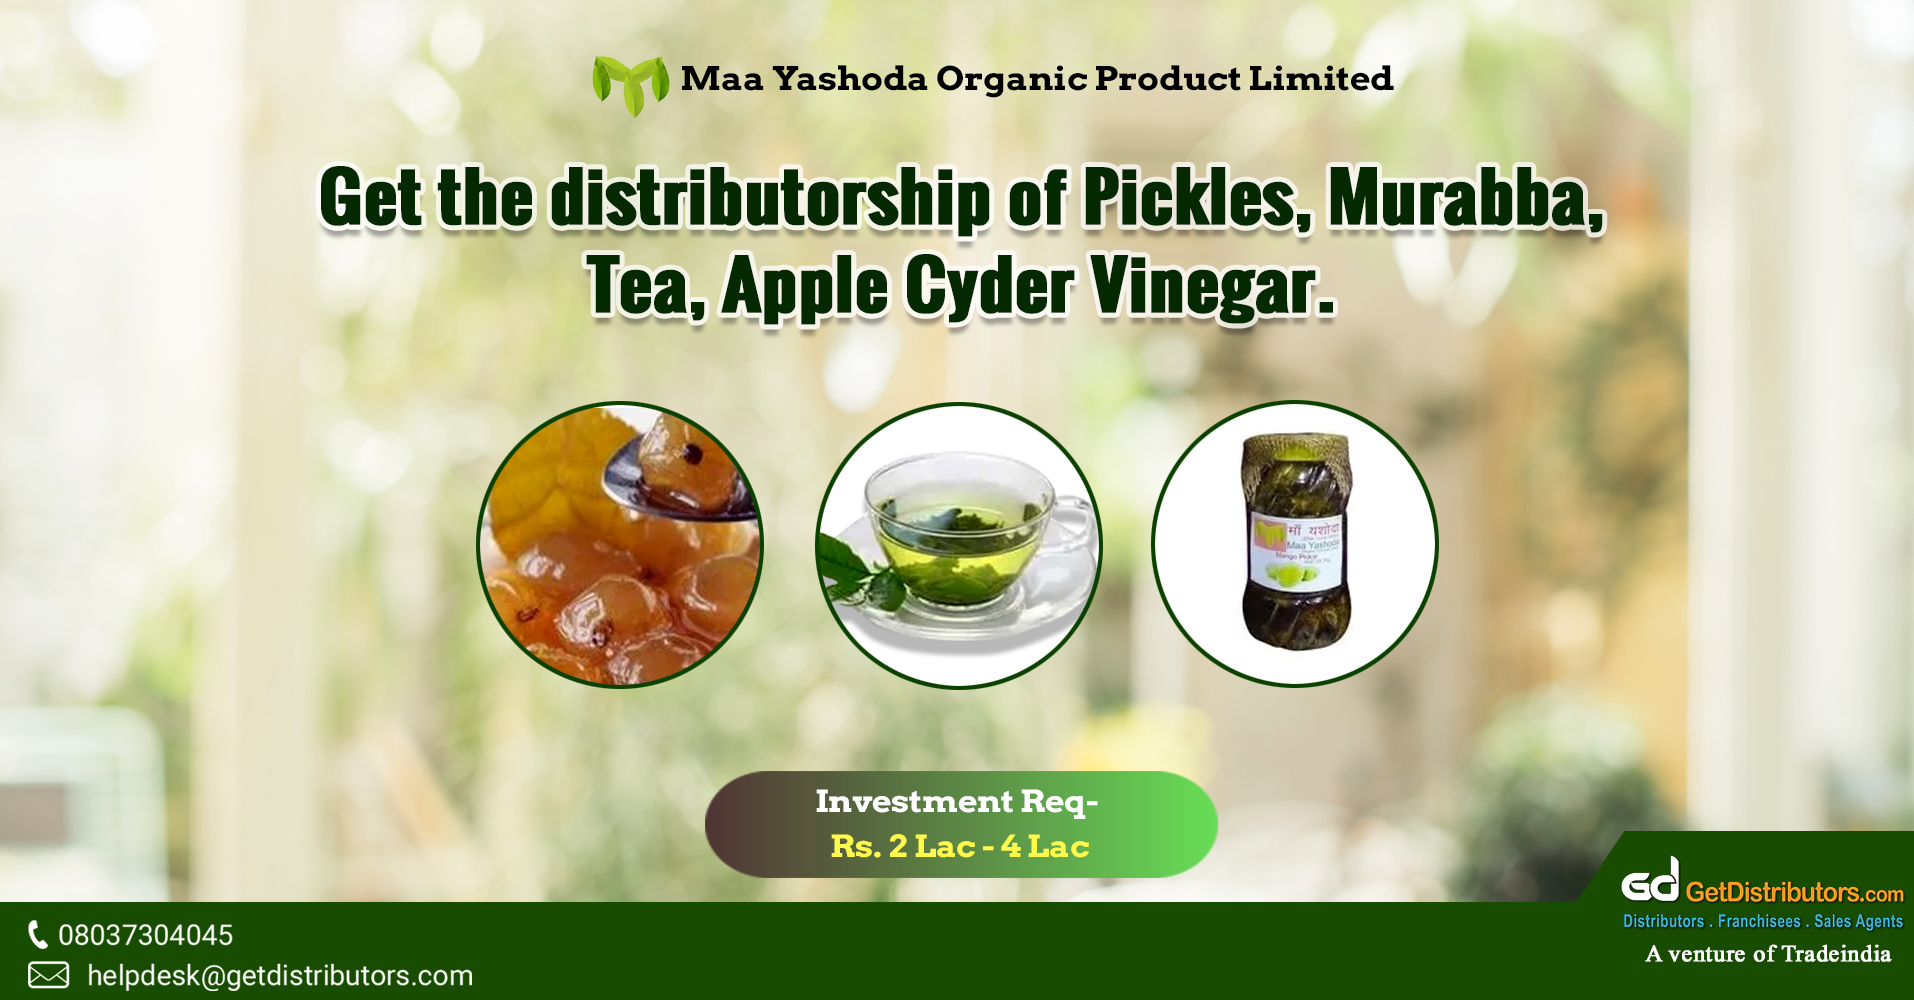 Maa Yashoda Organic Product Limited